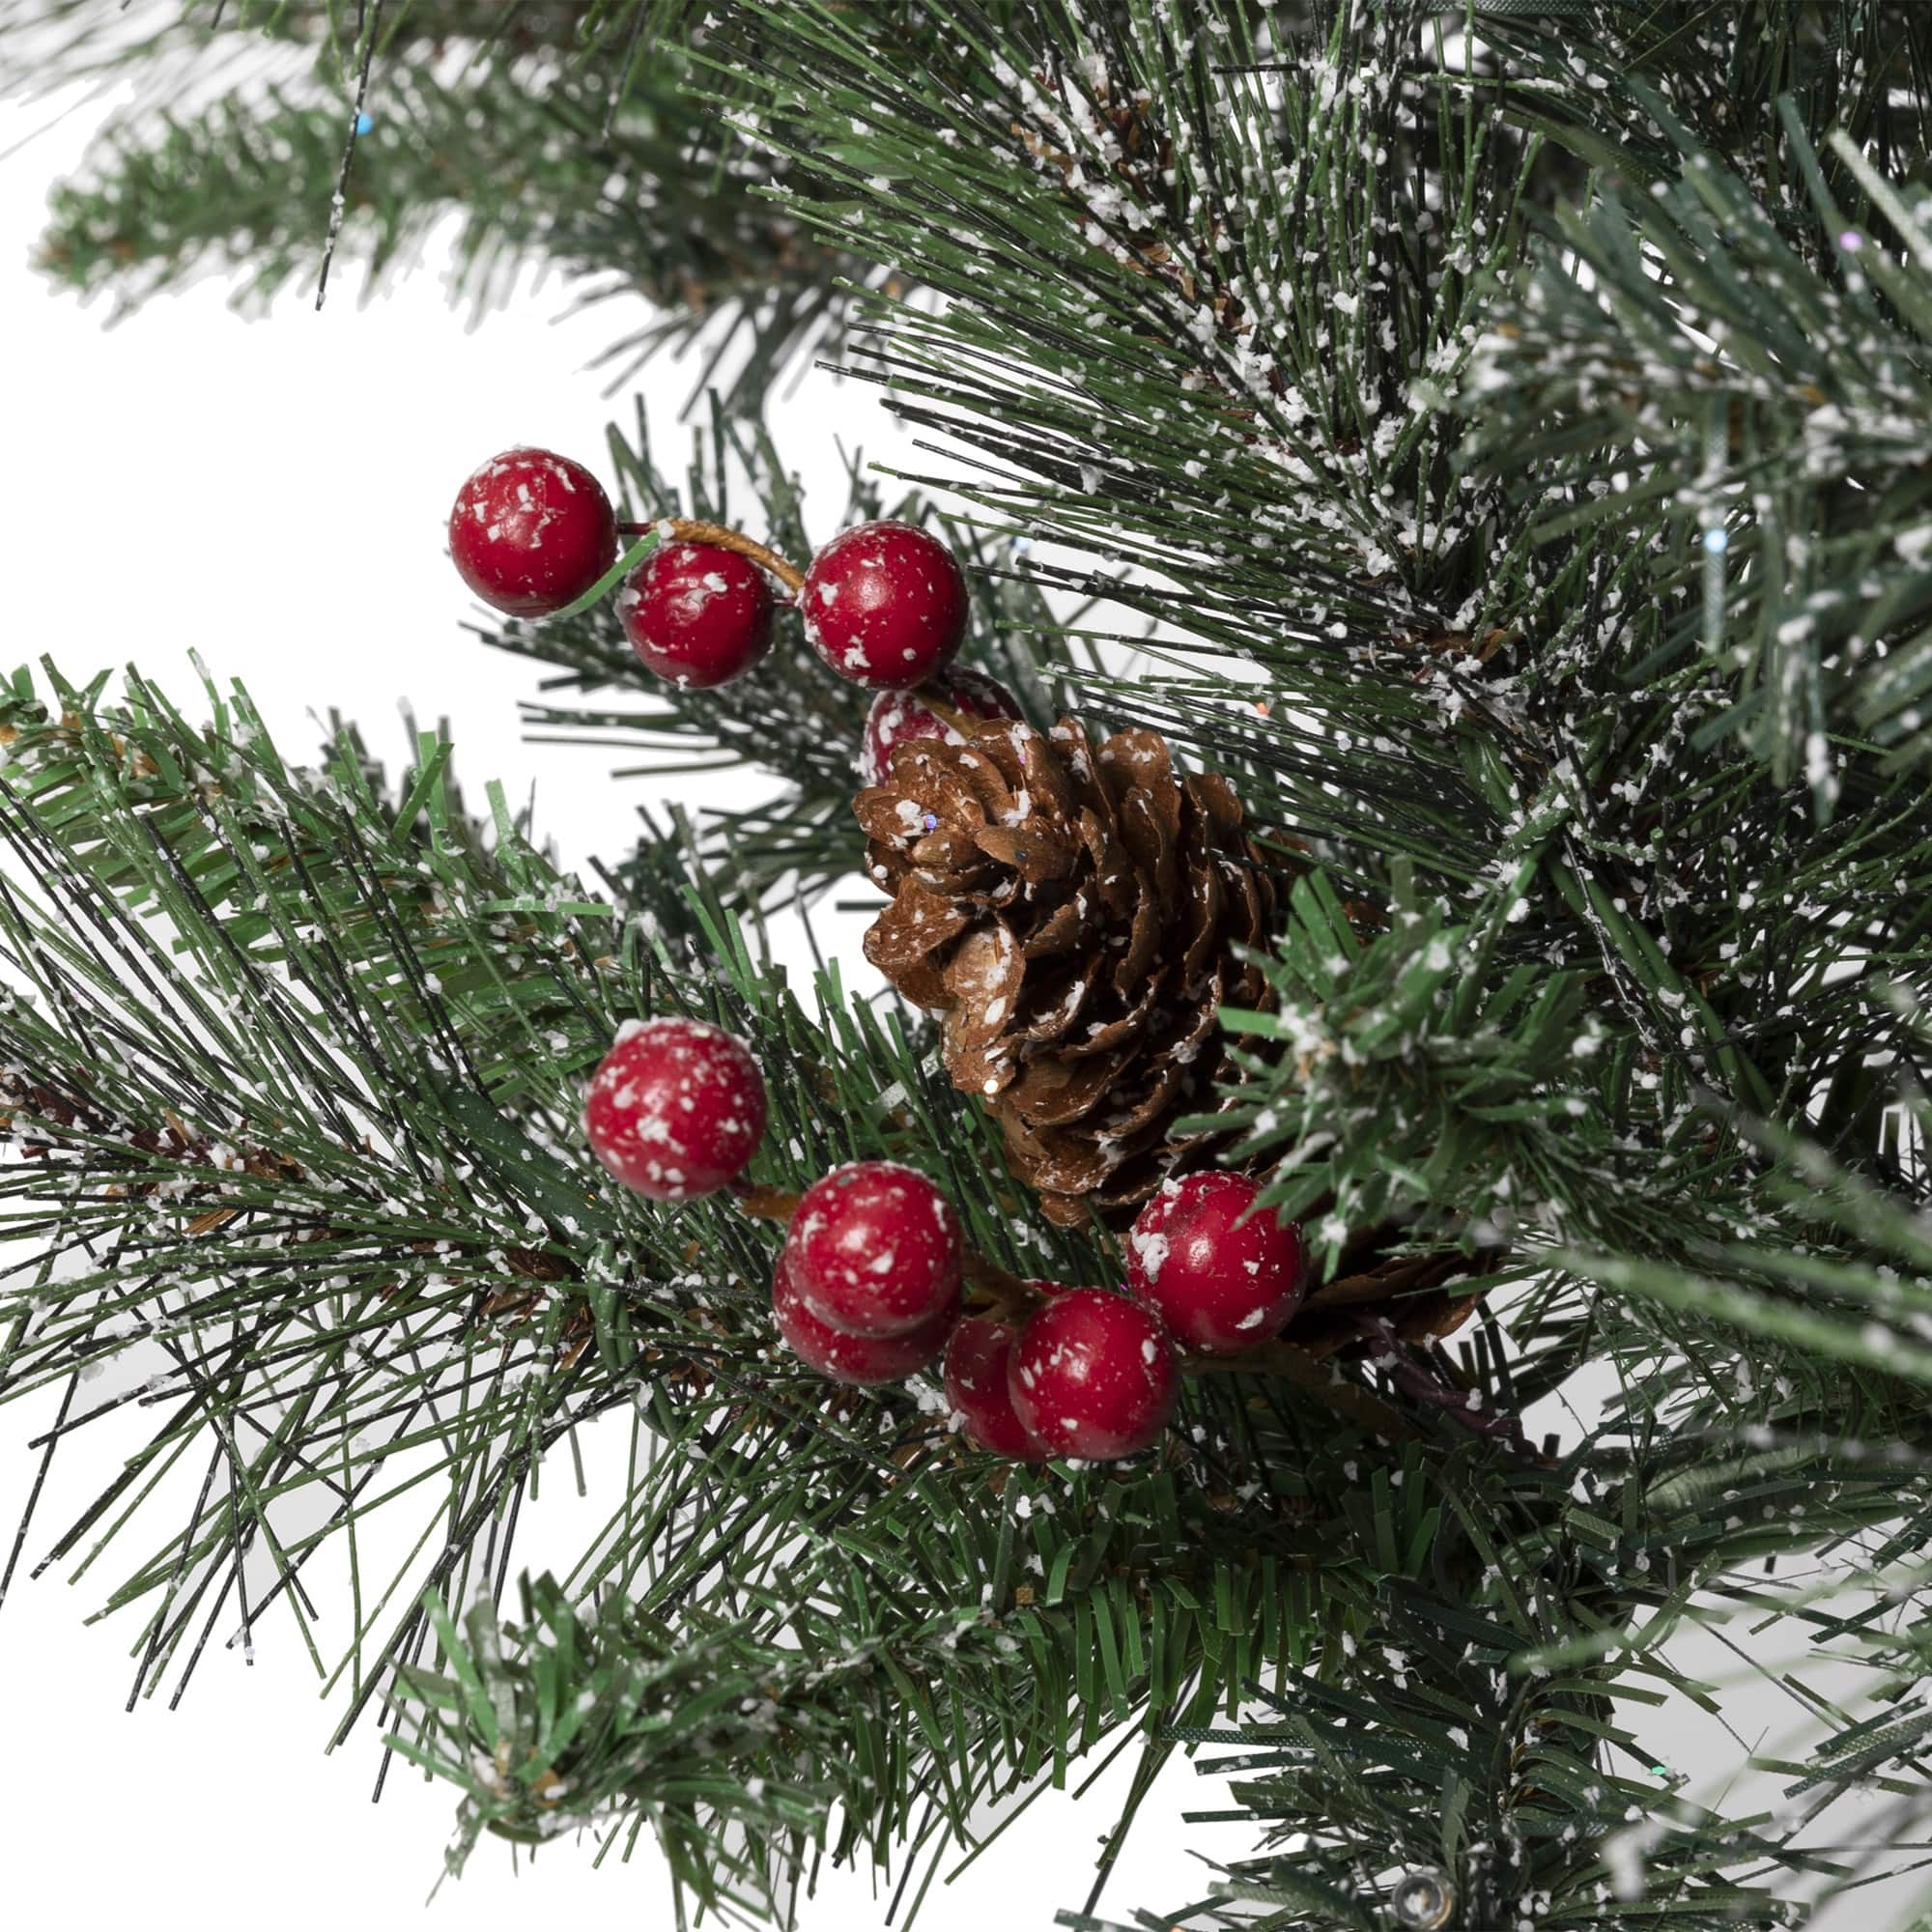 7.5ft. Pre-Lit Pine Artificial Christmas Tree, Warm White LED Lights